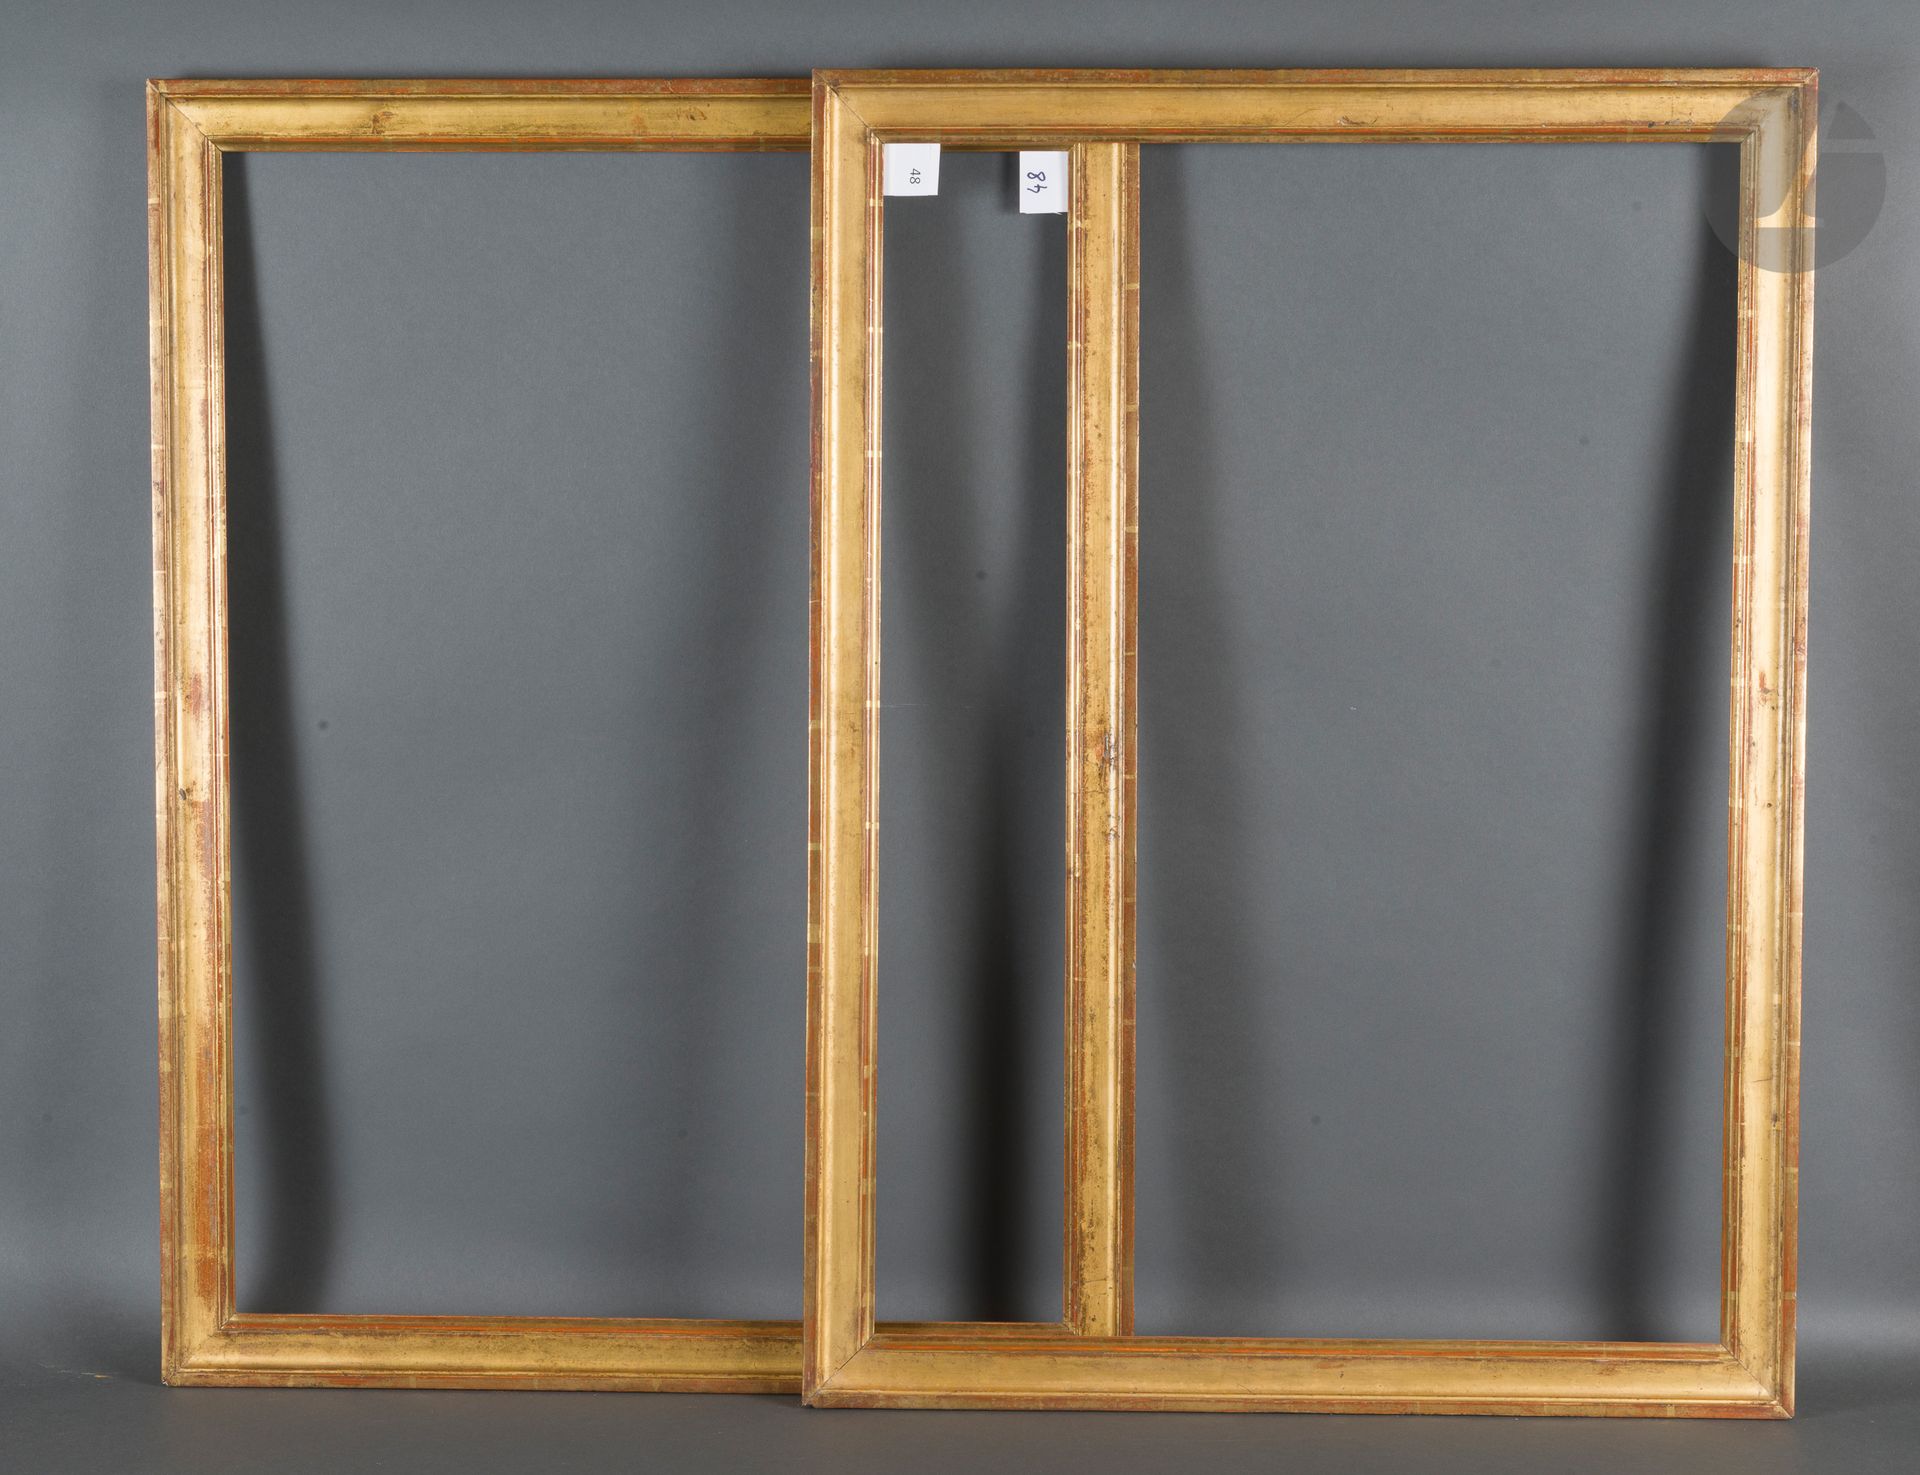 Null 一对模制和镀金的木制长棍。
18世纪末-19世纪初。
53 x 74,7厘米和53 x 74,3厘米 - 外形：4,7厘米
见前页的复制品